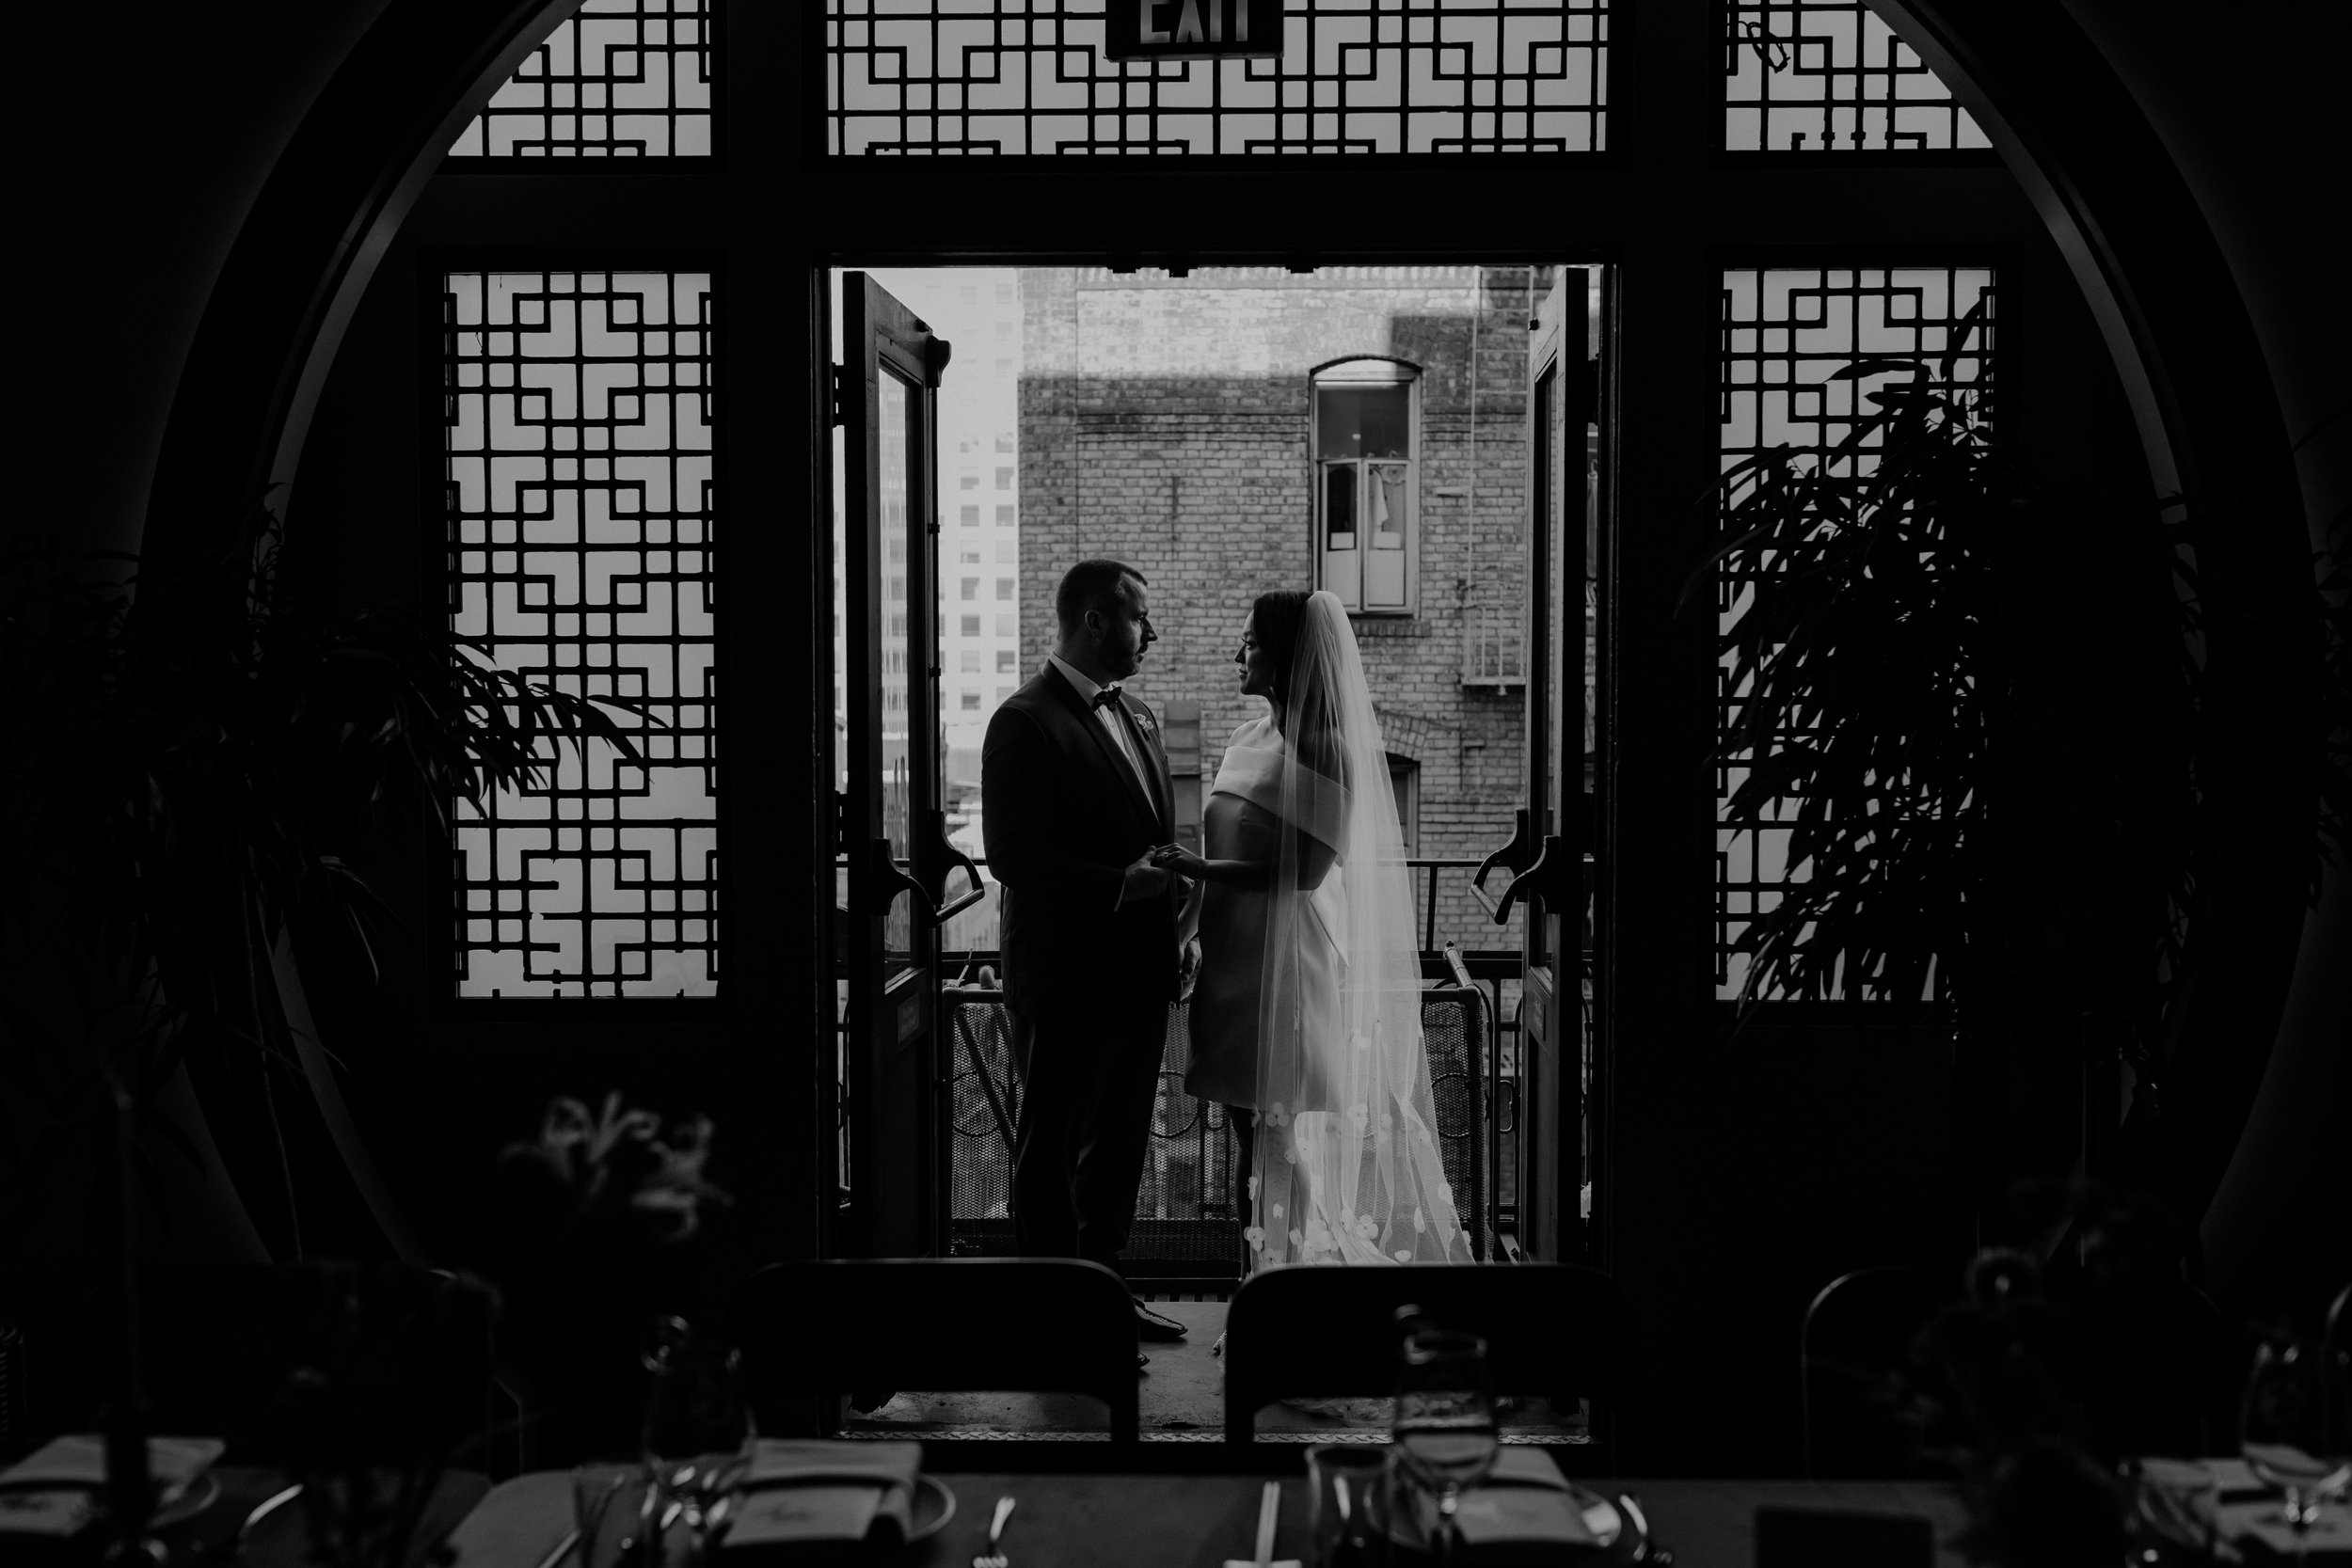  Denise and Matt's Wedding in San Francisco, CA - Eve Rox Photography 